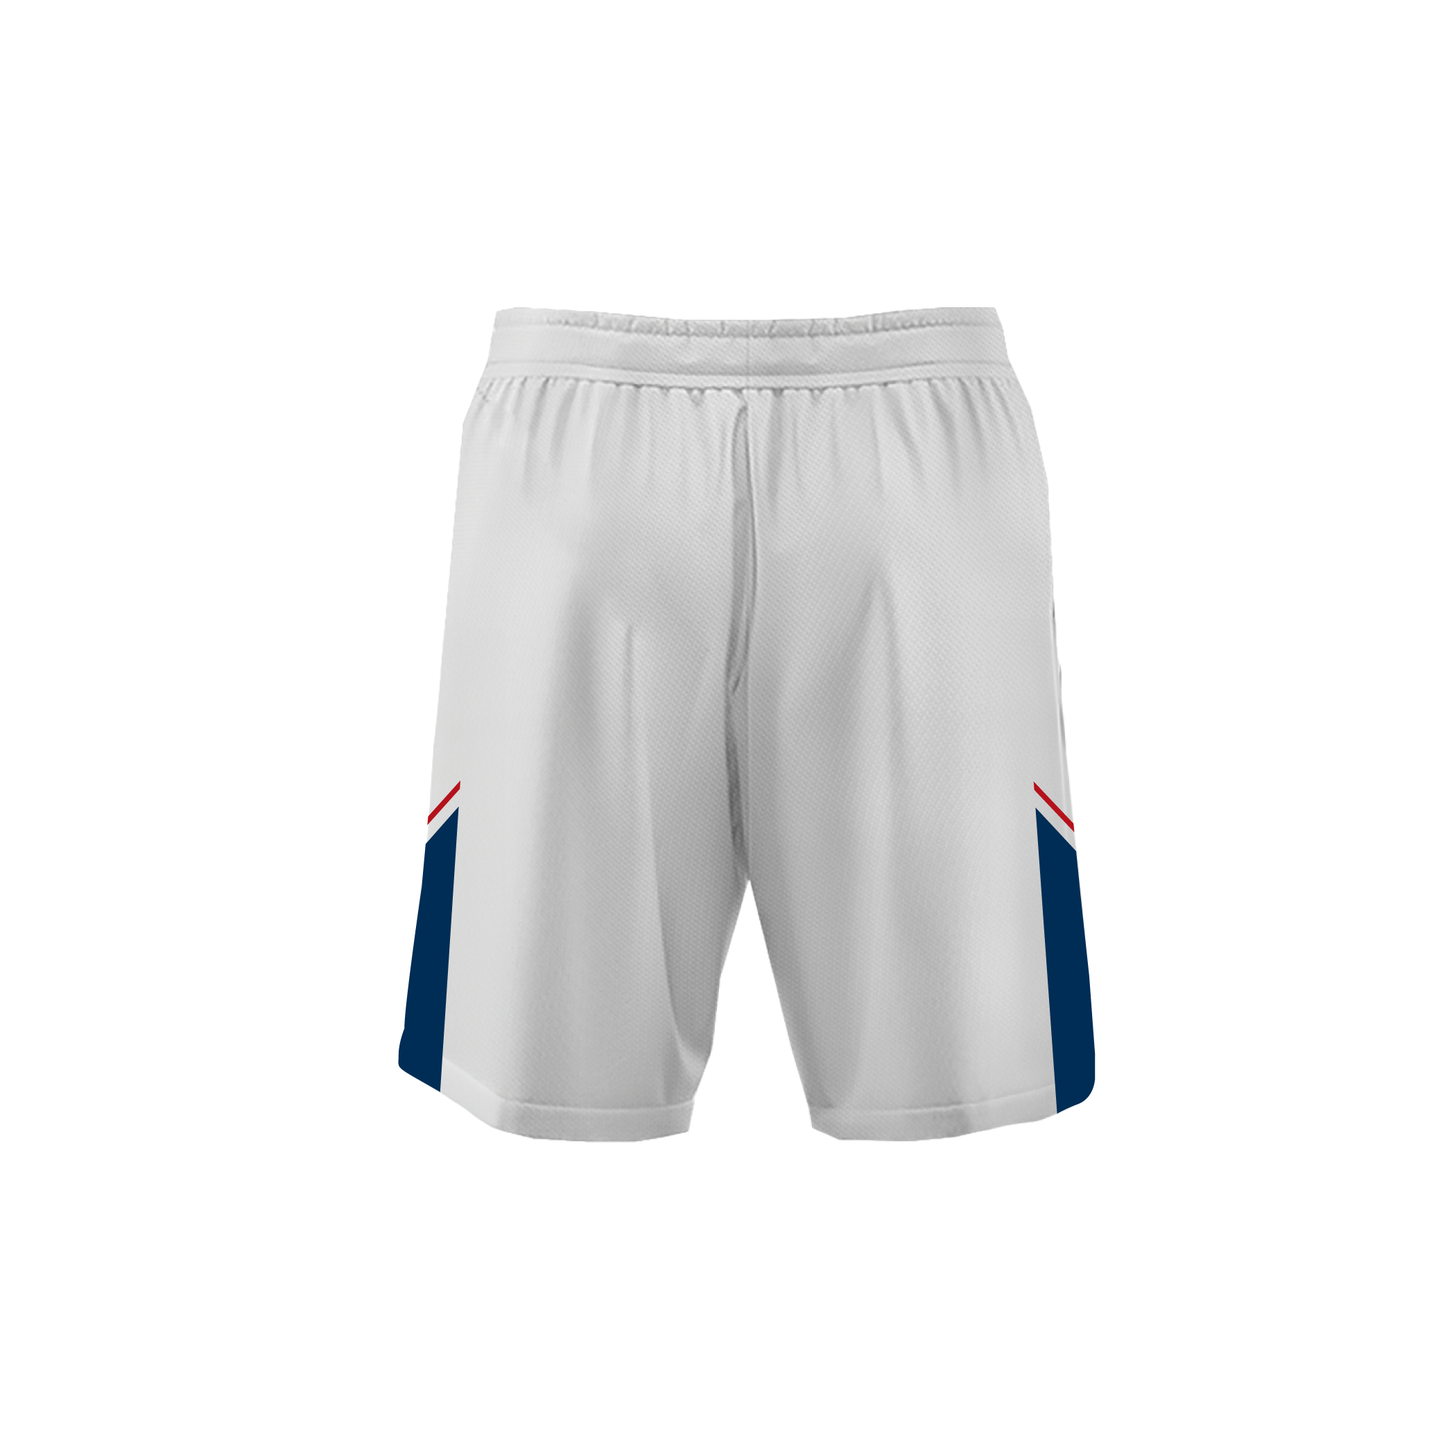 Boston World Series - CUSTOM Men's Gym Shorts